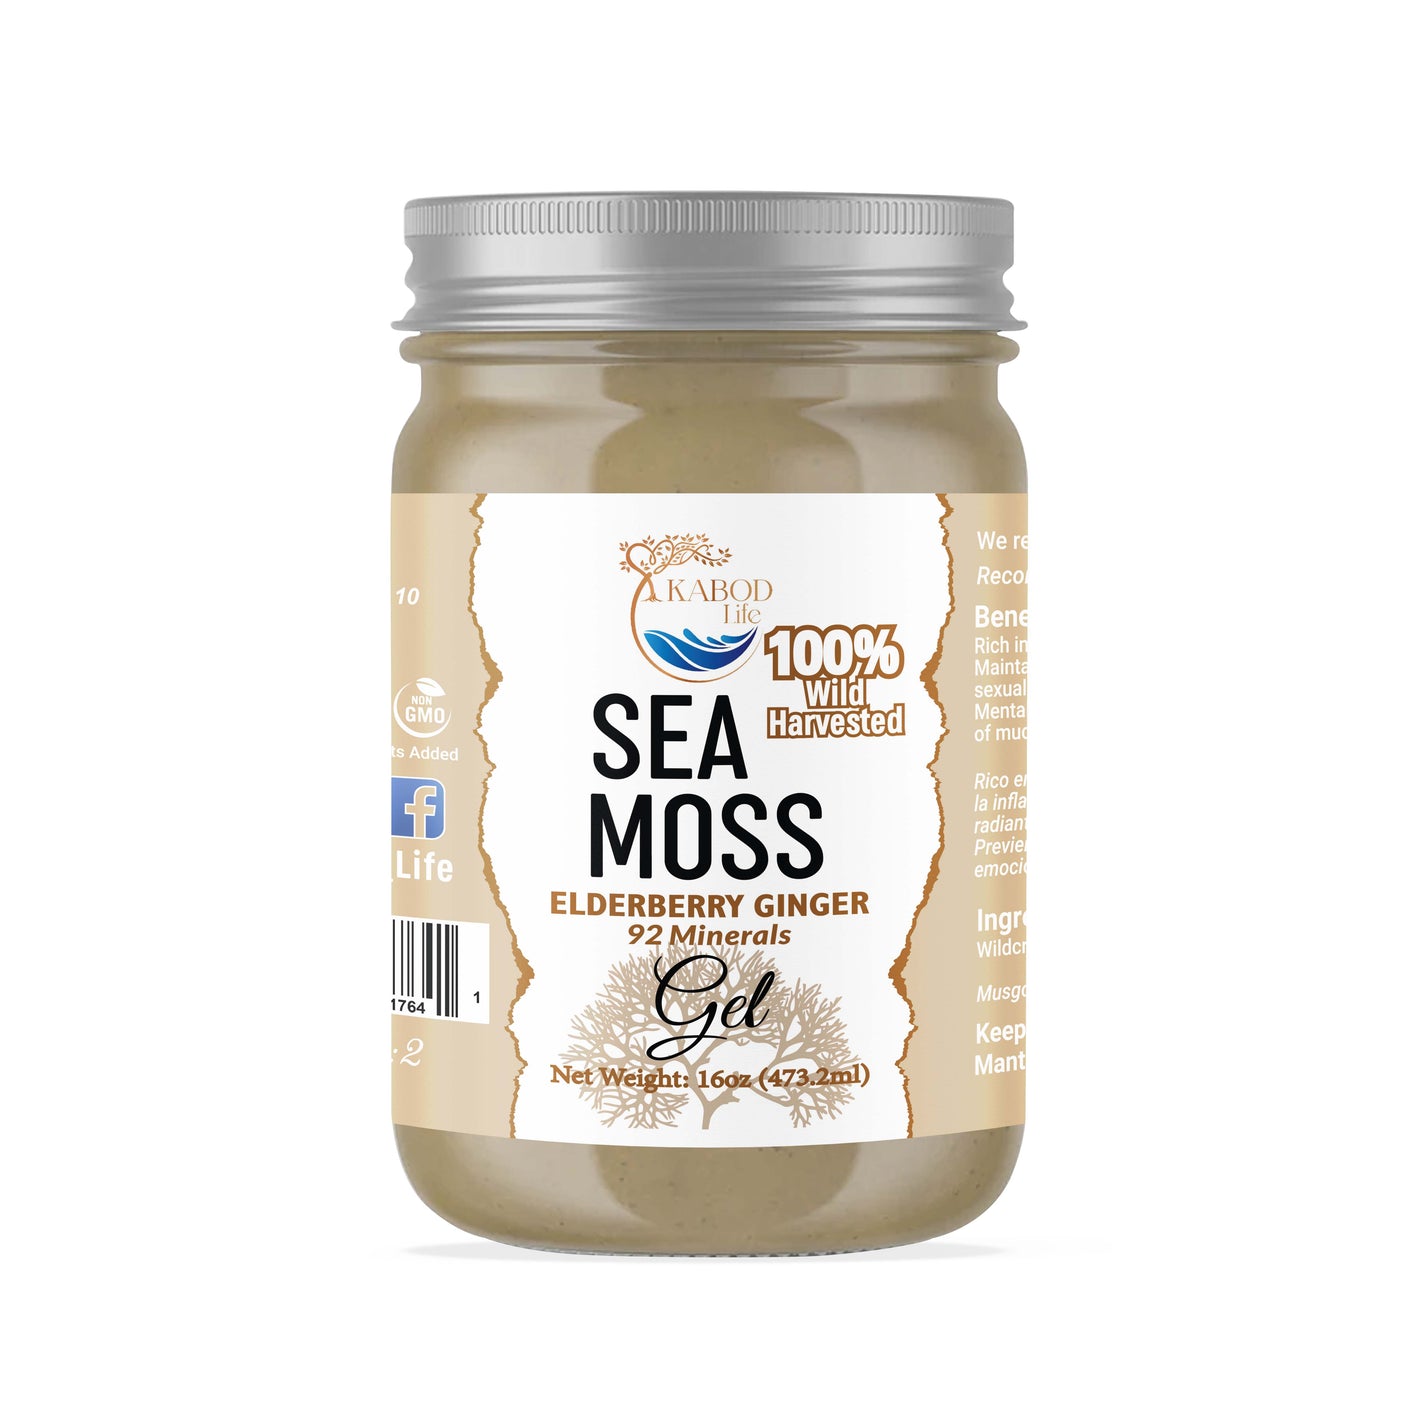 100%Wild Harvested Sea Moss Gel Organic Elderberry Ginger 16oz